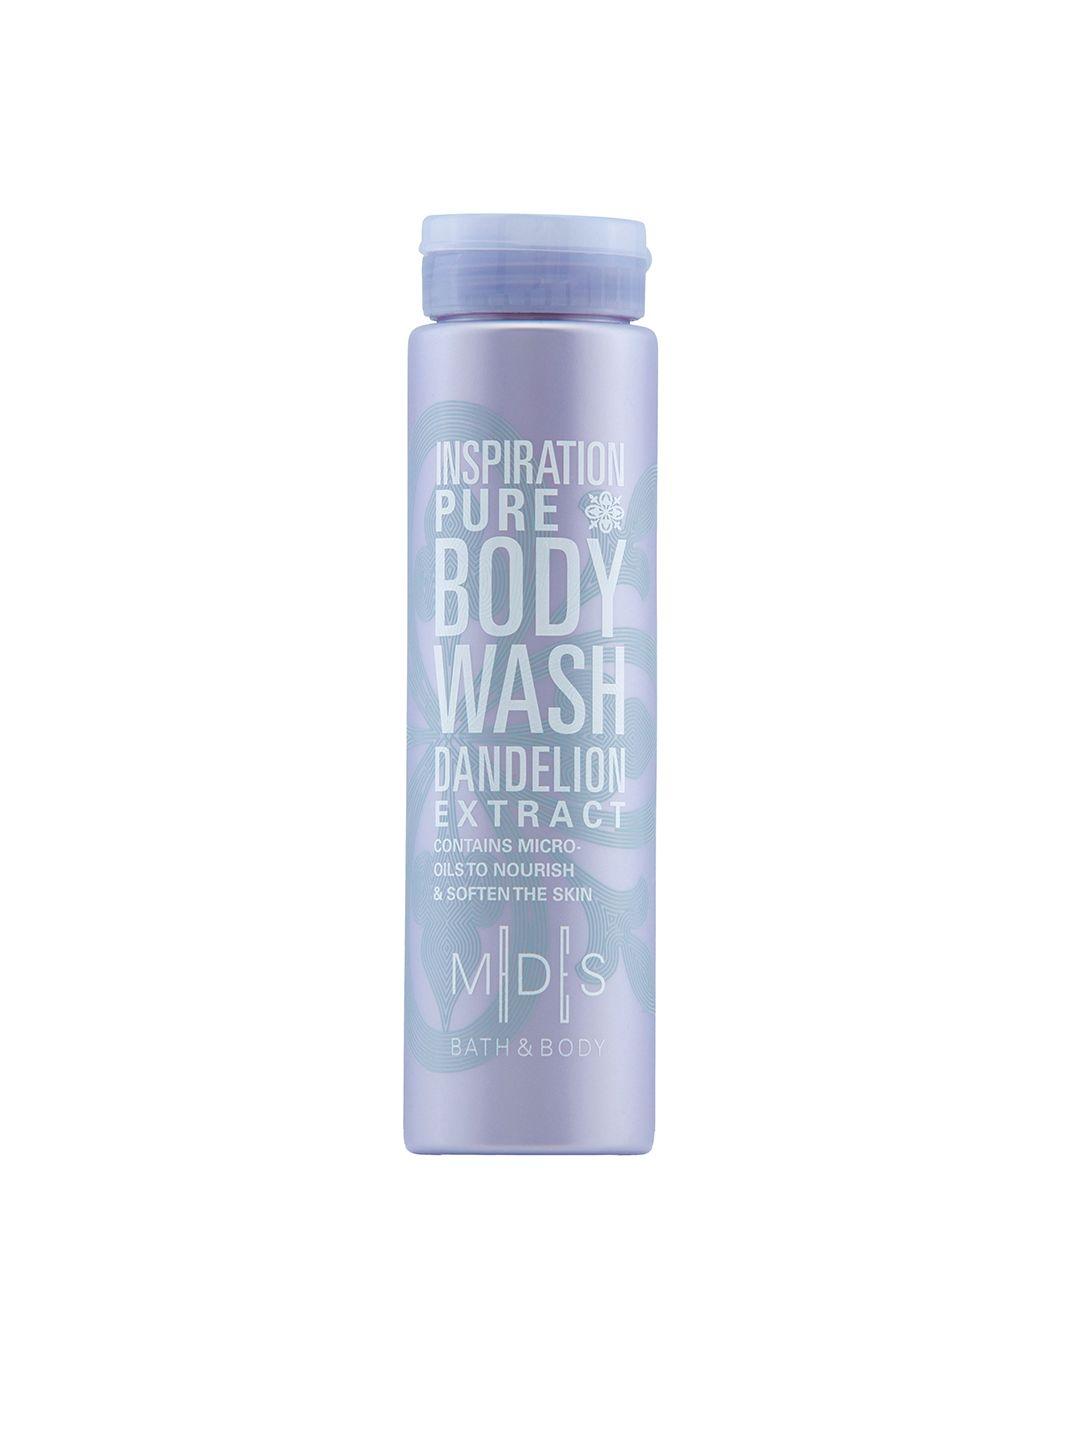 mades-unisex-bath-&-body-inspiration-pure-dandelion-extract-body-wash-200-ml